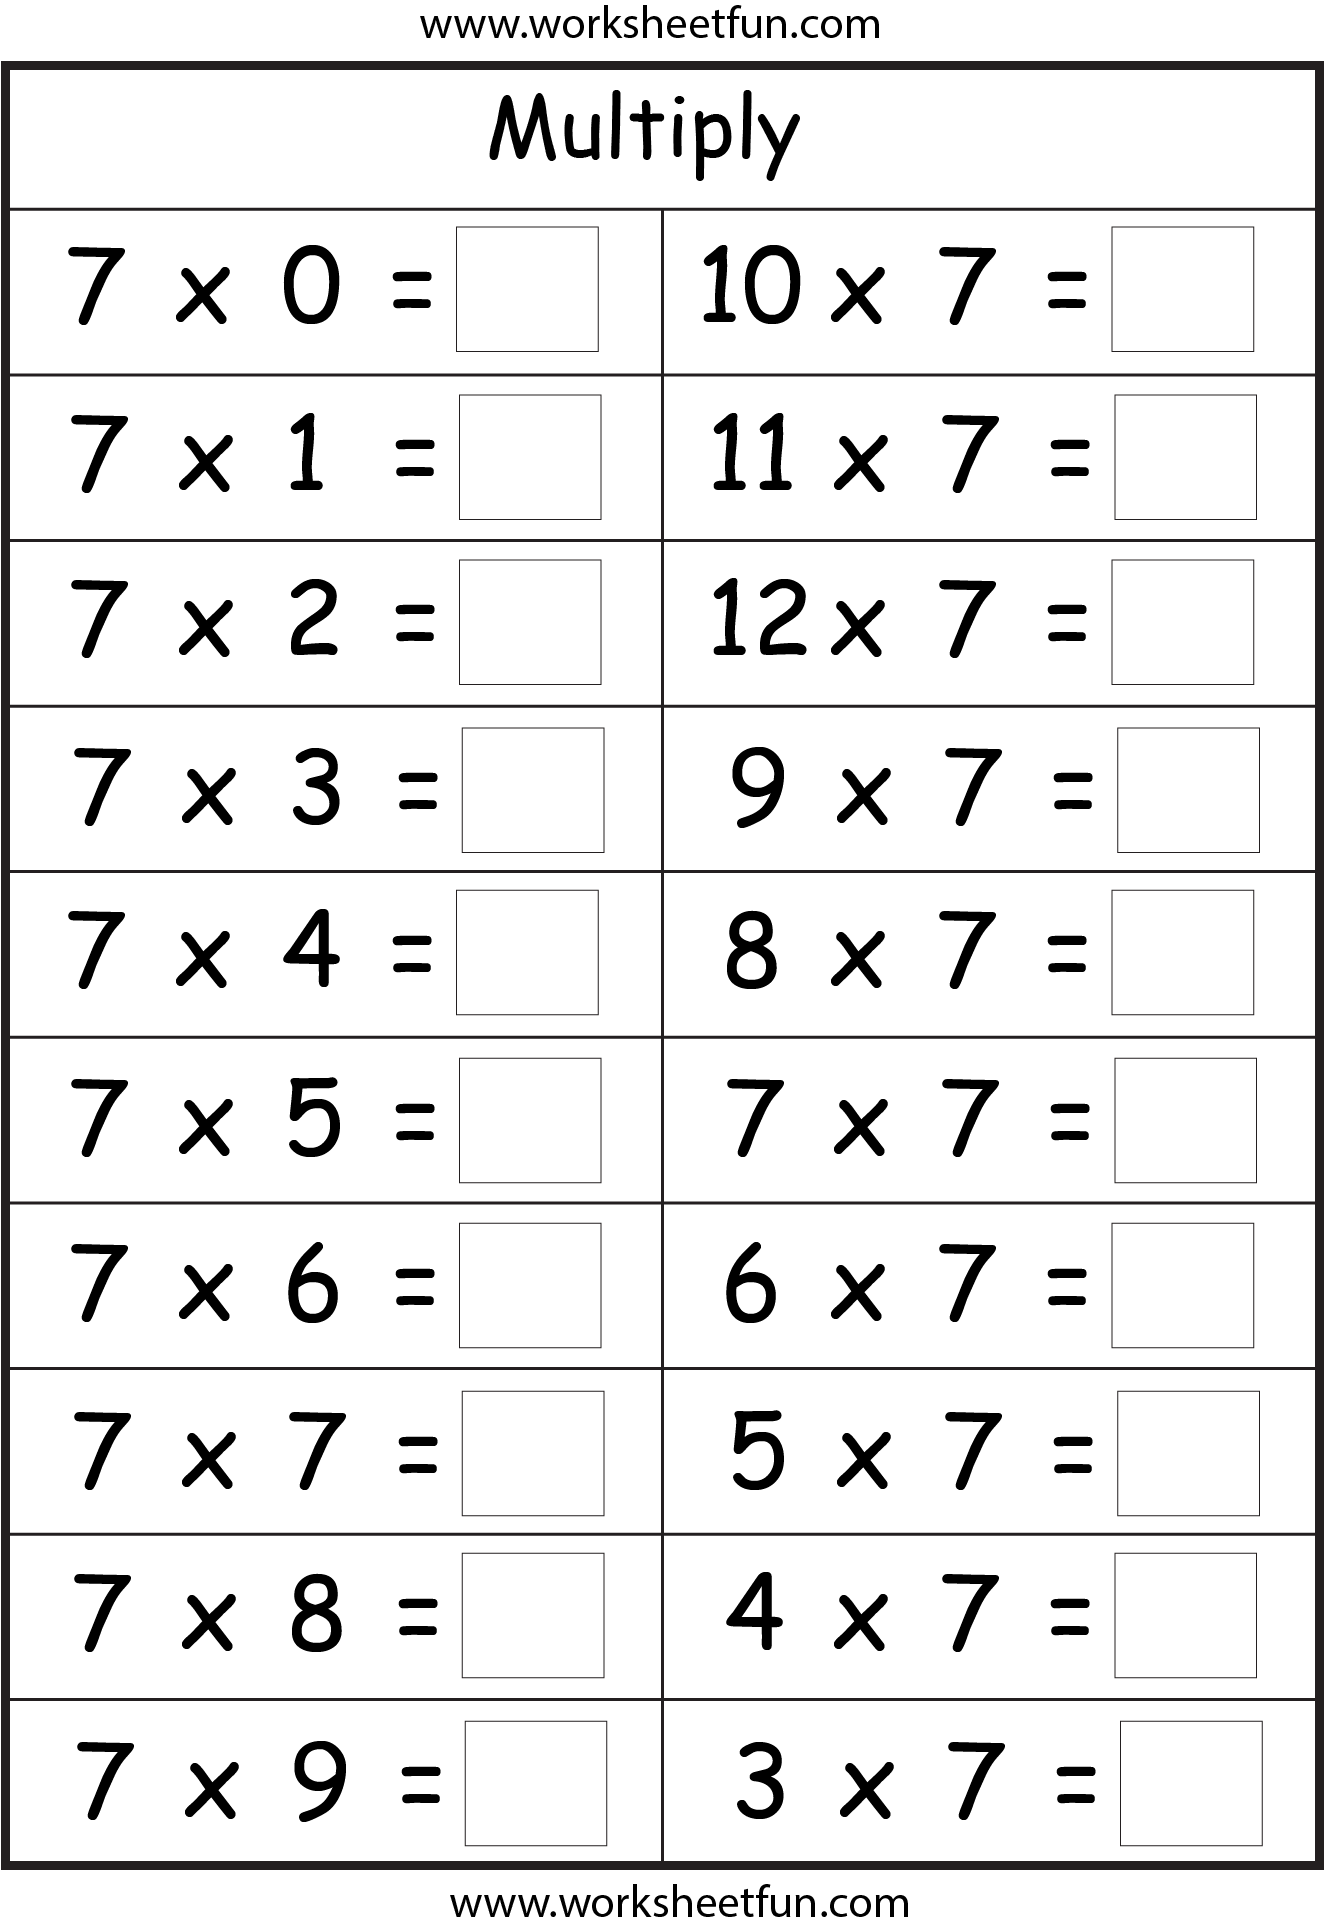 multiplication-worksheets-x1-printablemultiplication